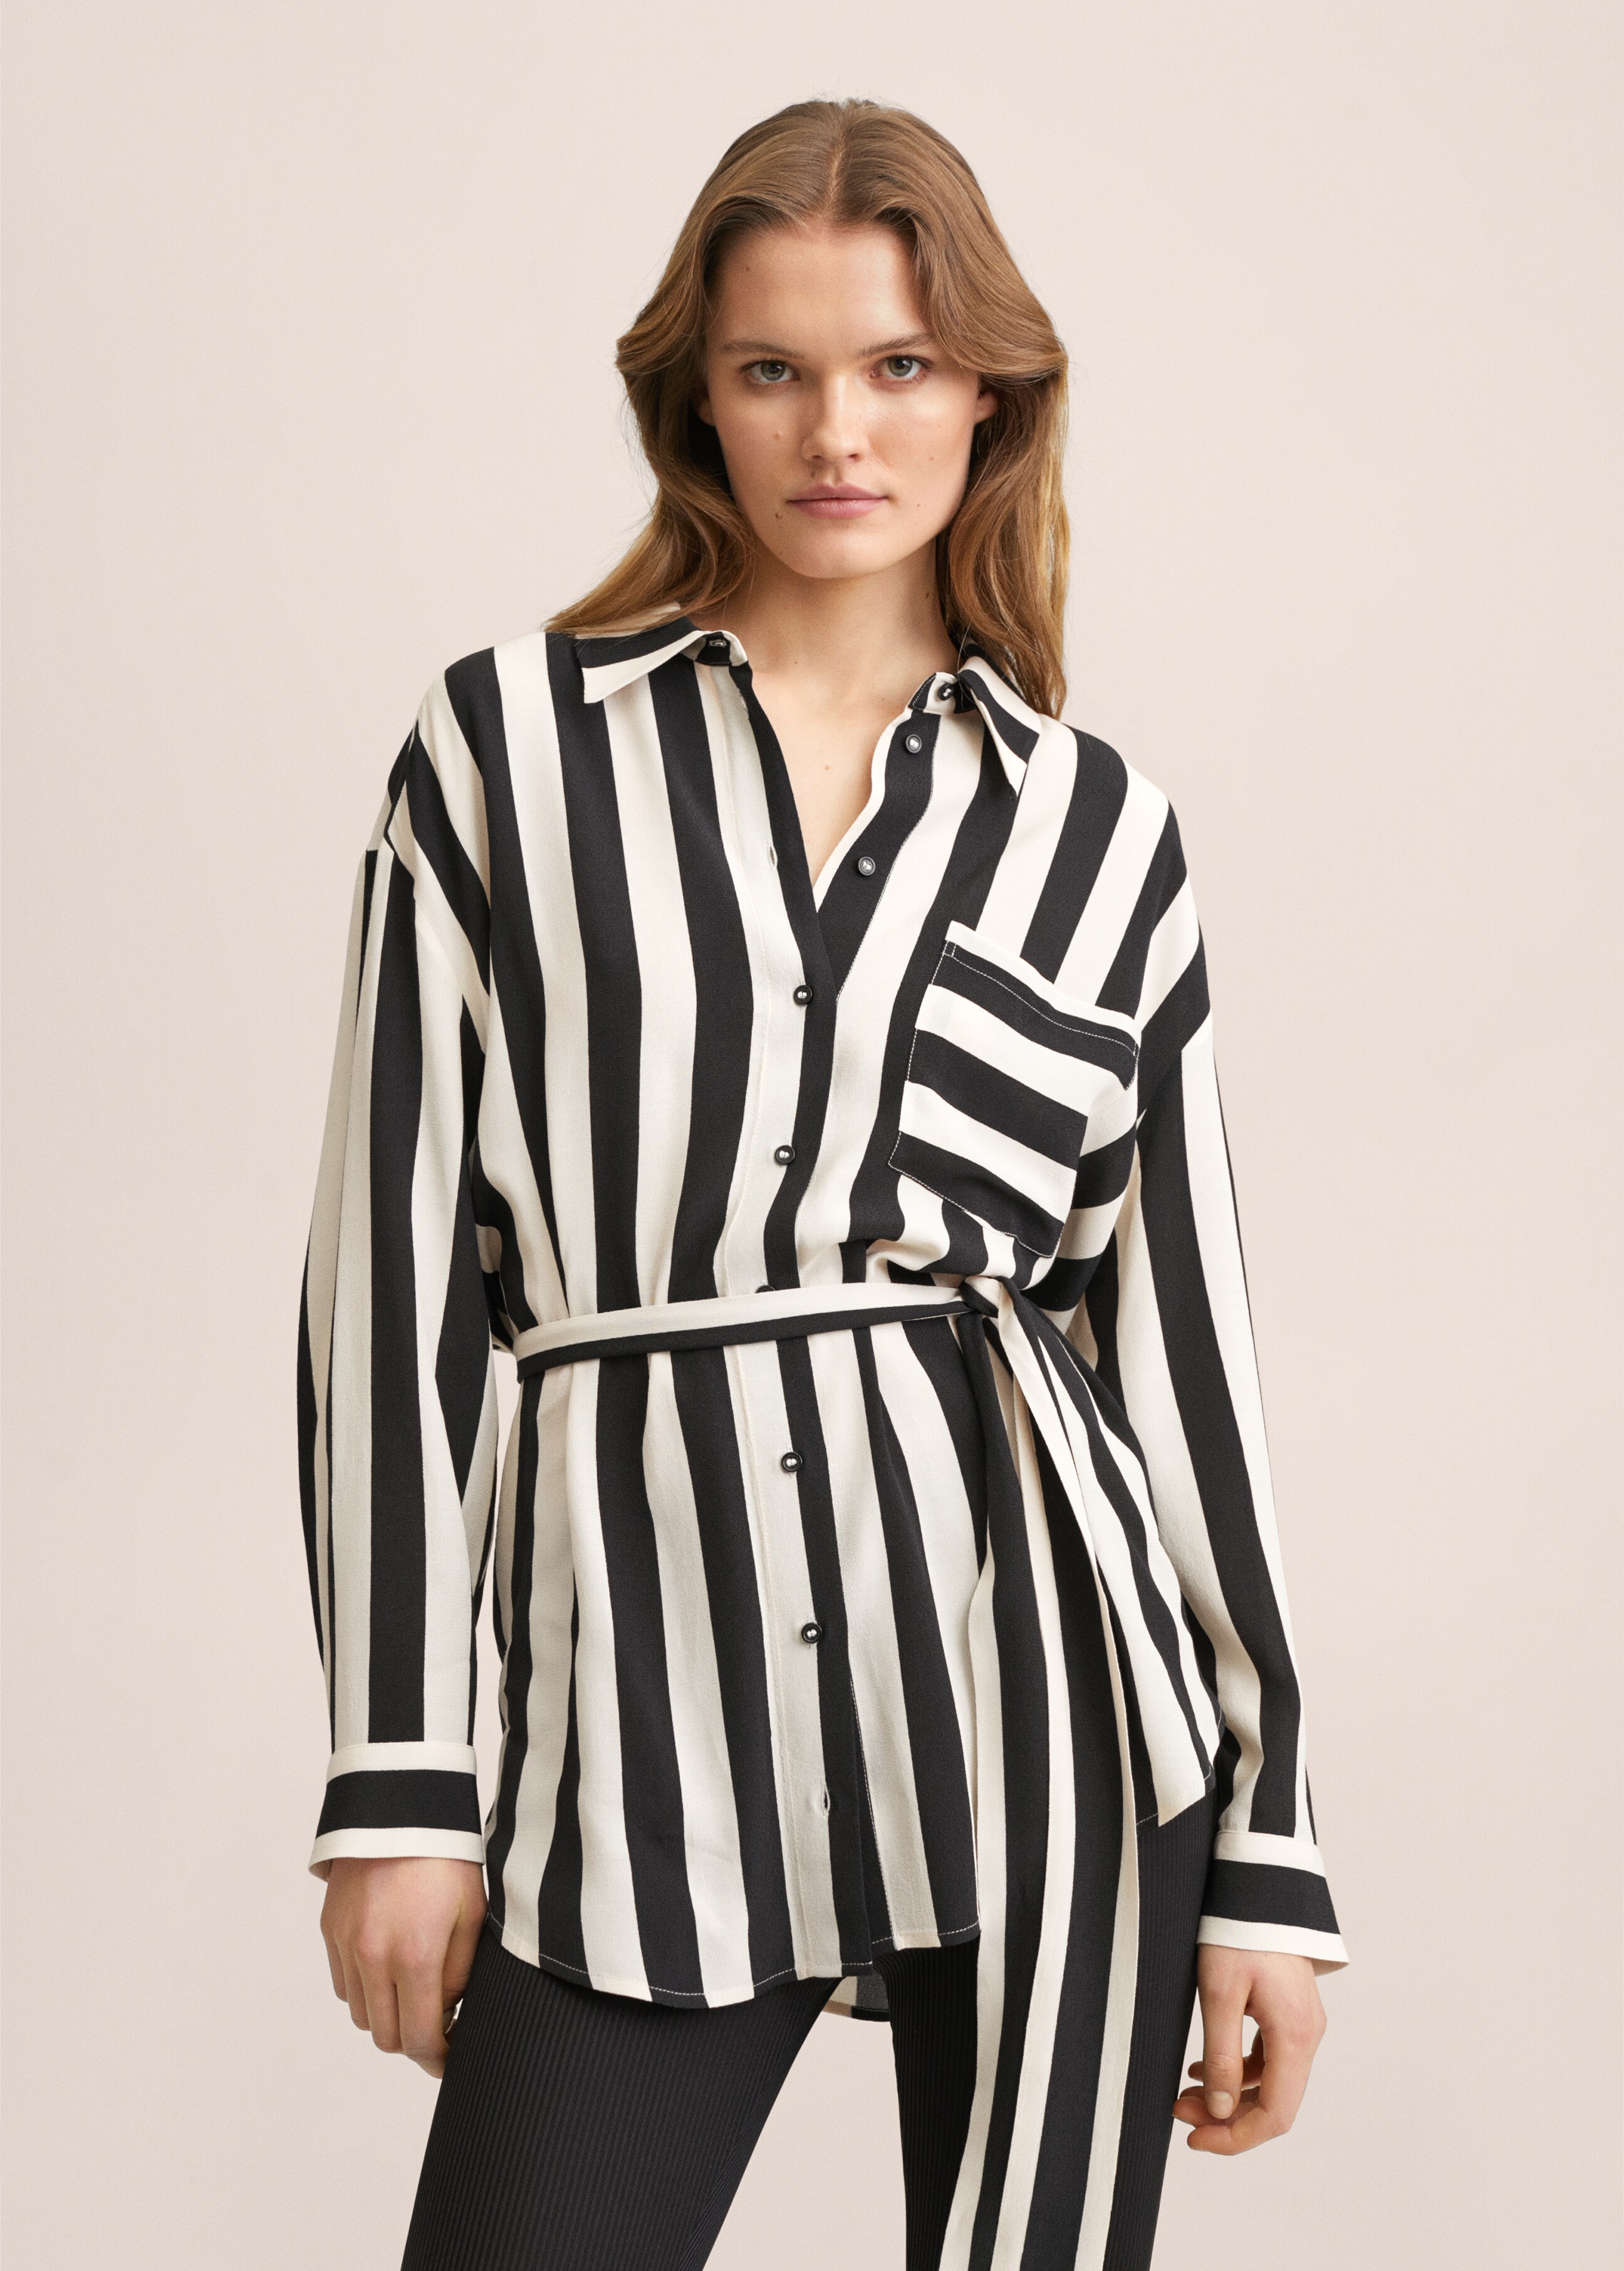 Oversize striped shirt - Medium plane